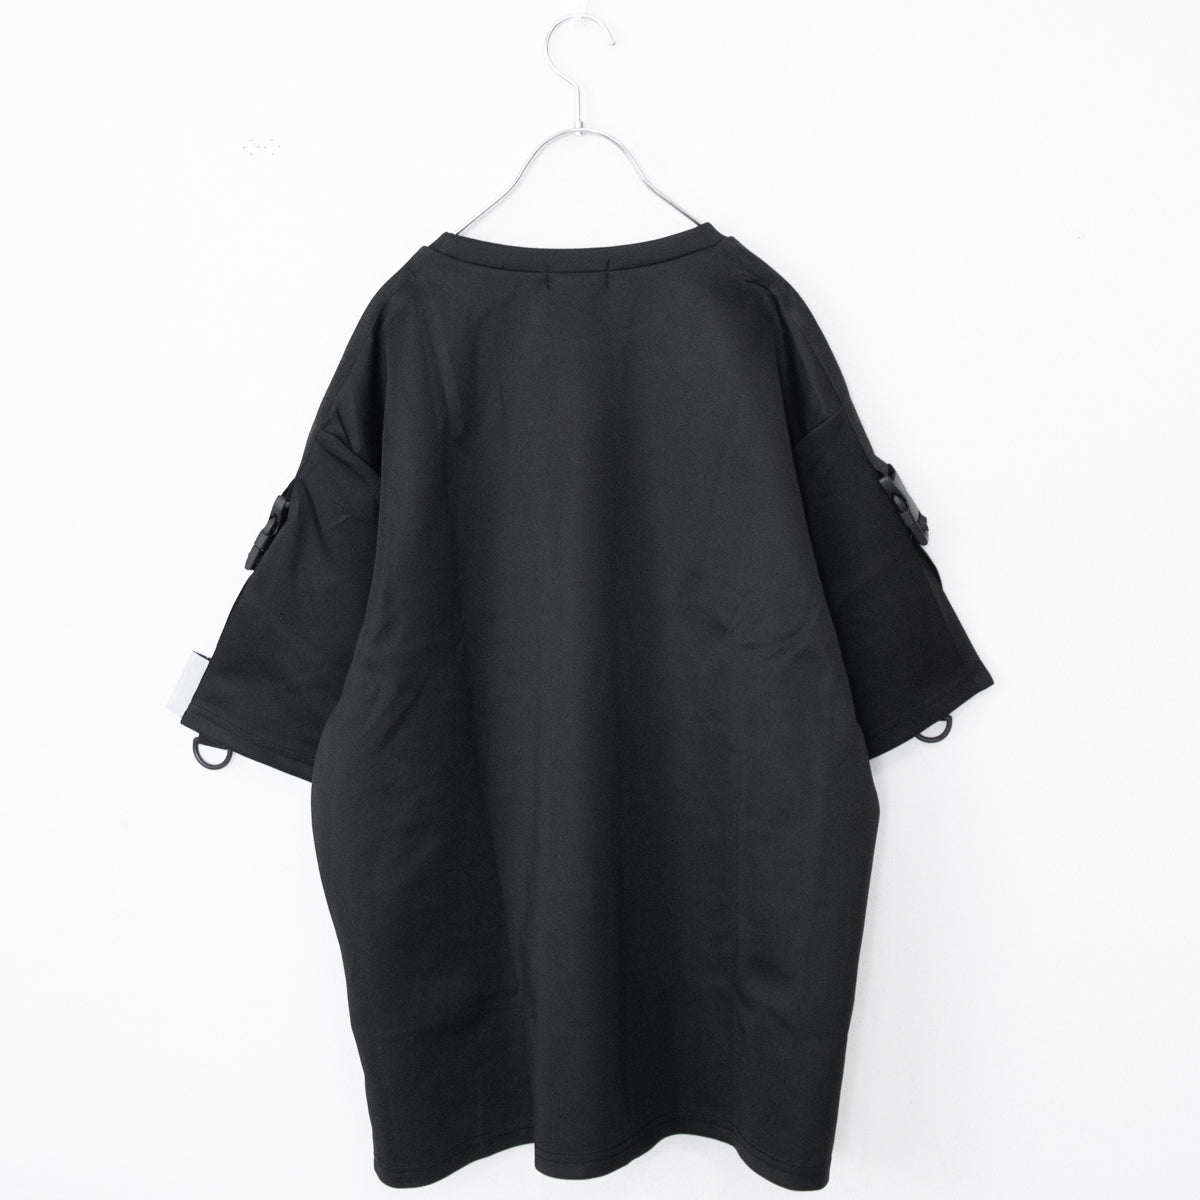 ACDC RAG Uzurai T-Shirt Black